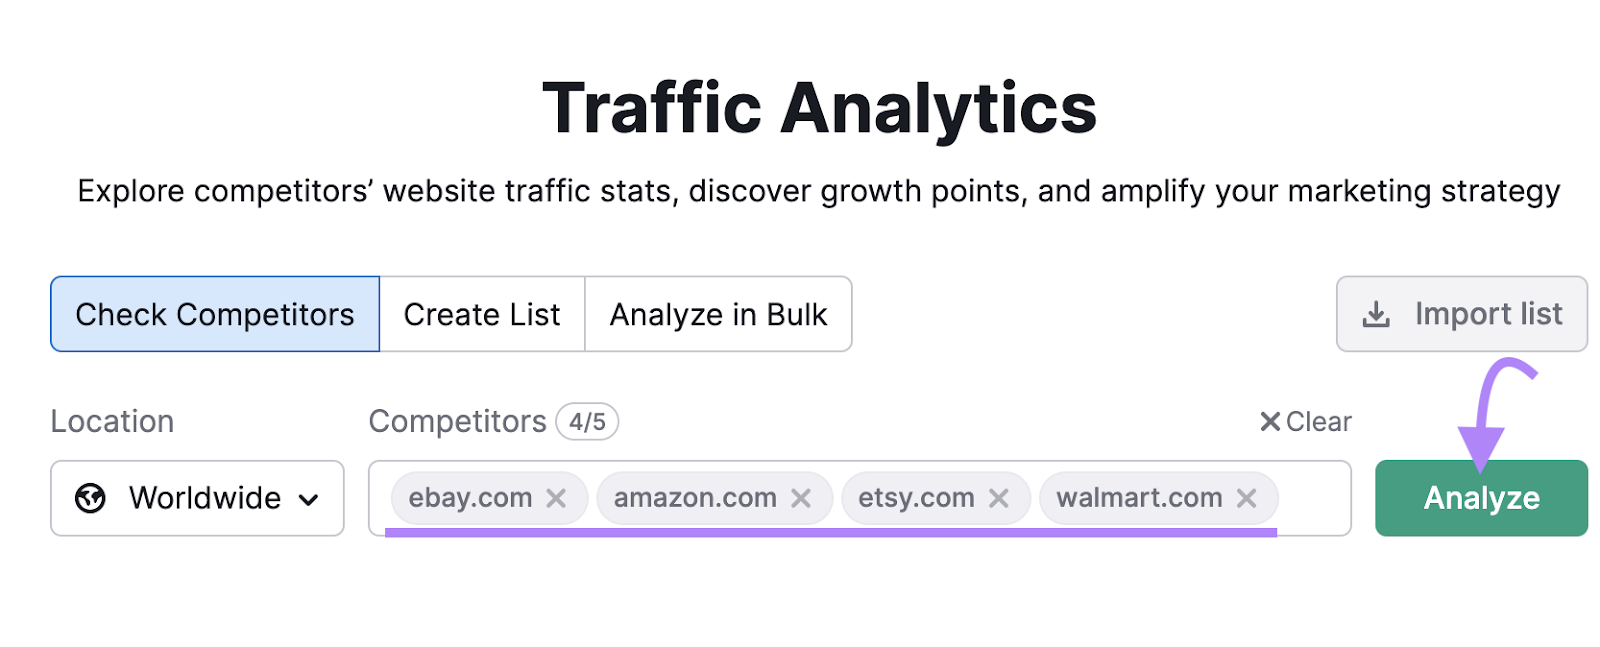 Traffic Analytics search bar